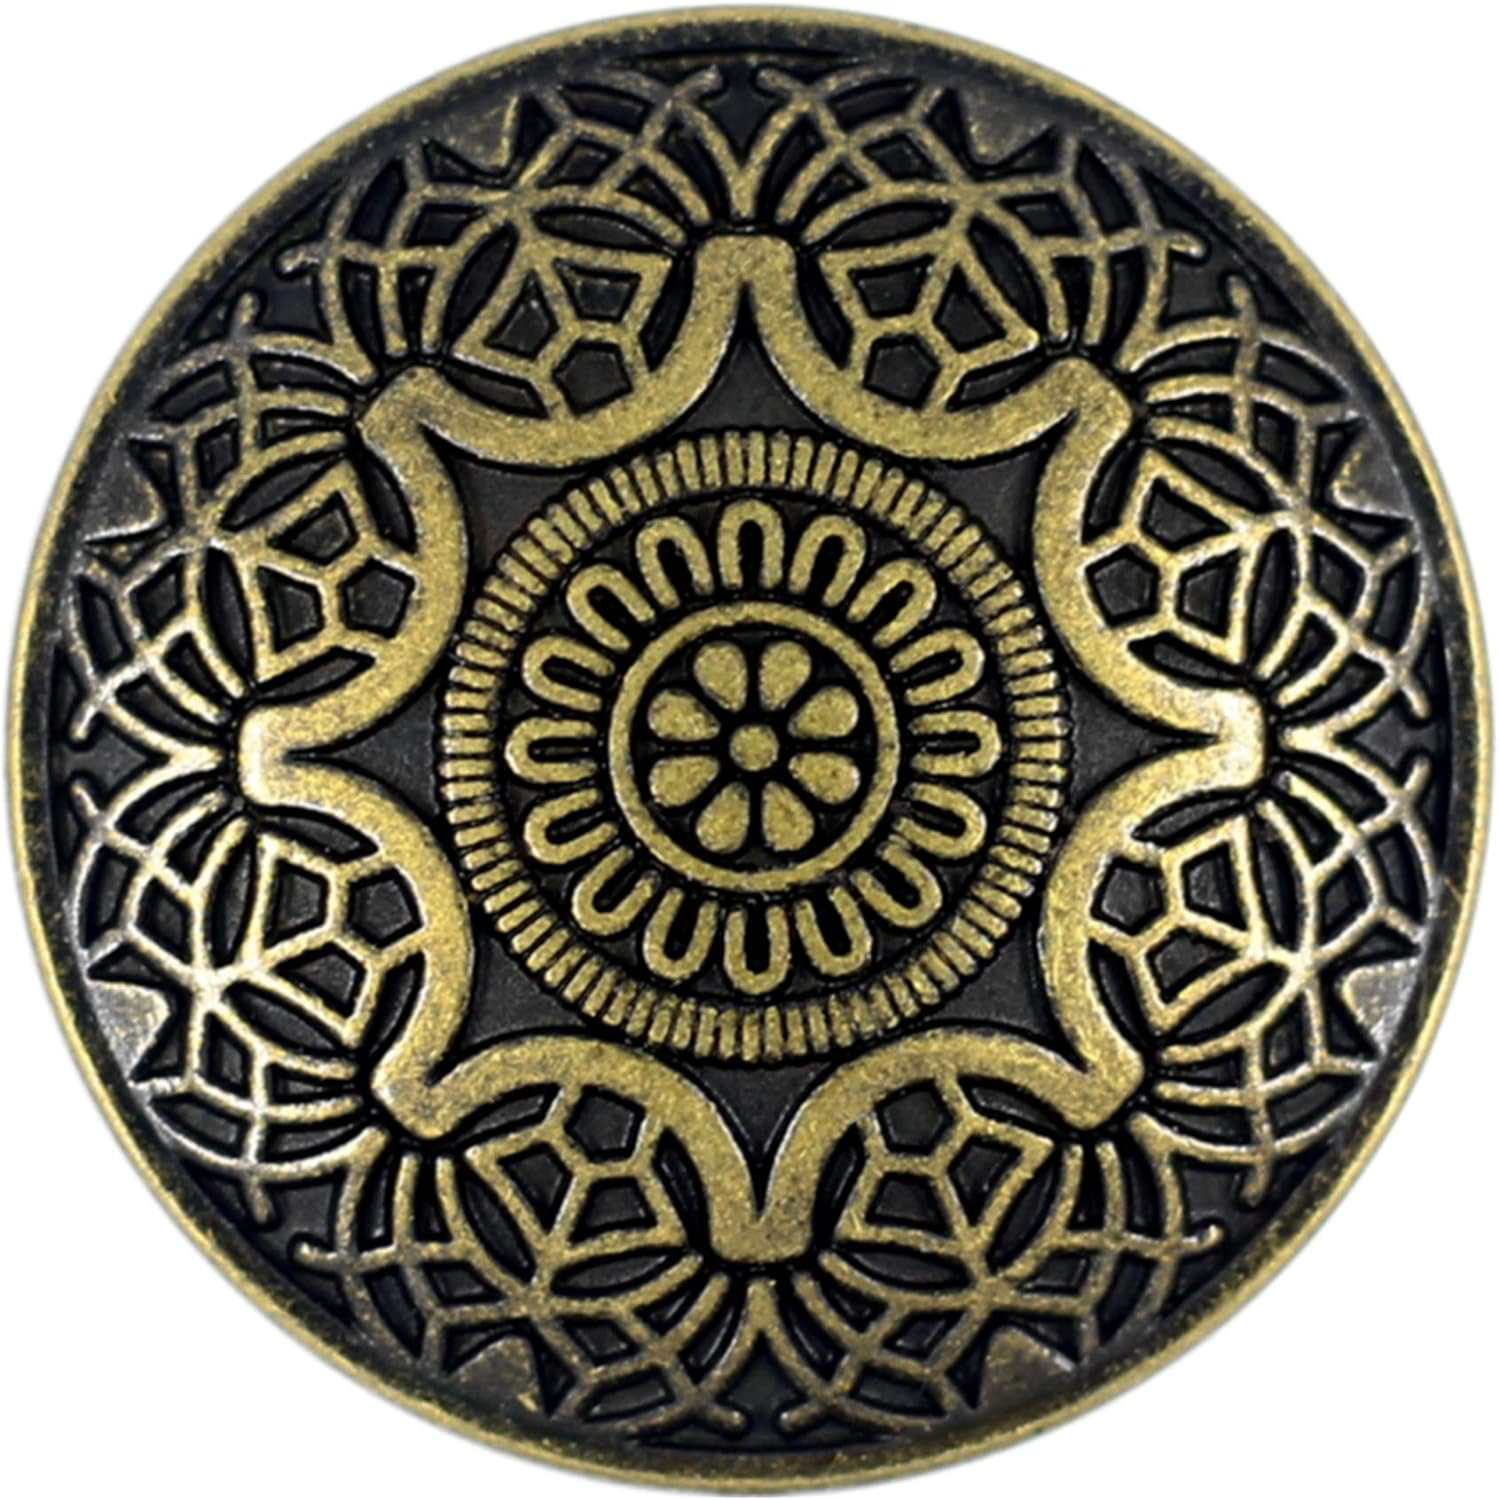 Bezelry 10 Pieces Arabesque Flower Metal Shank Buttons. 25mm (1 inch) (Antique B